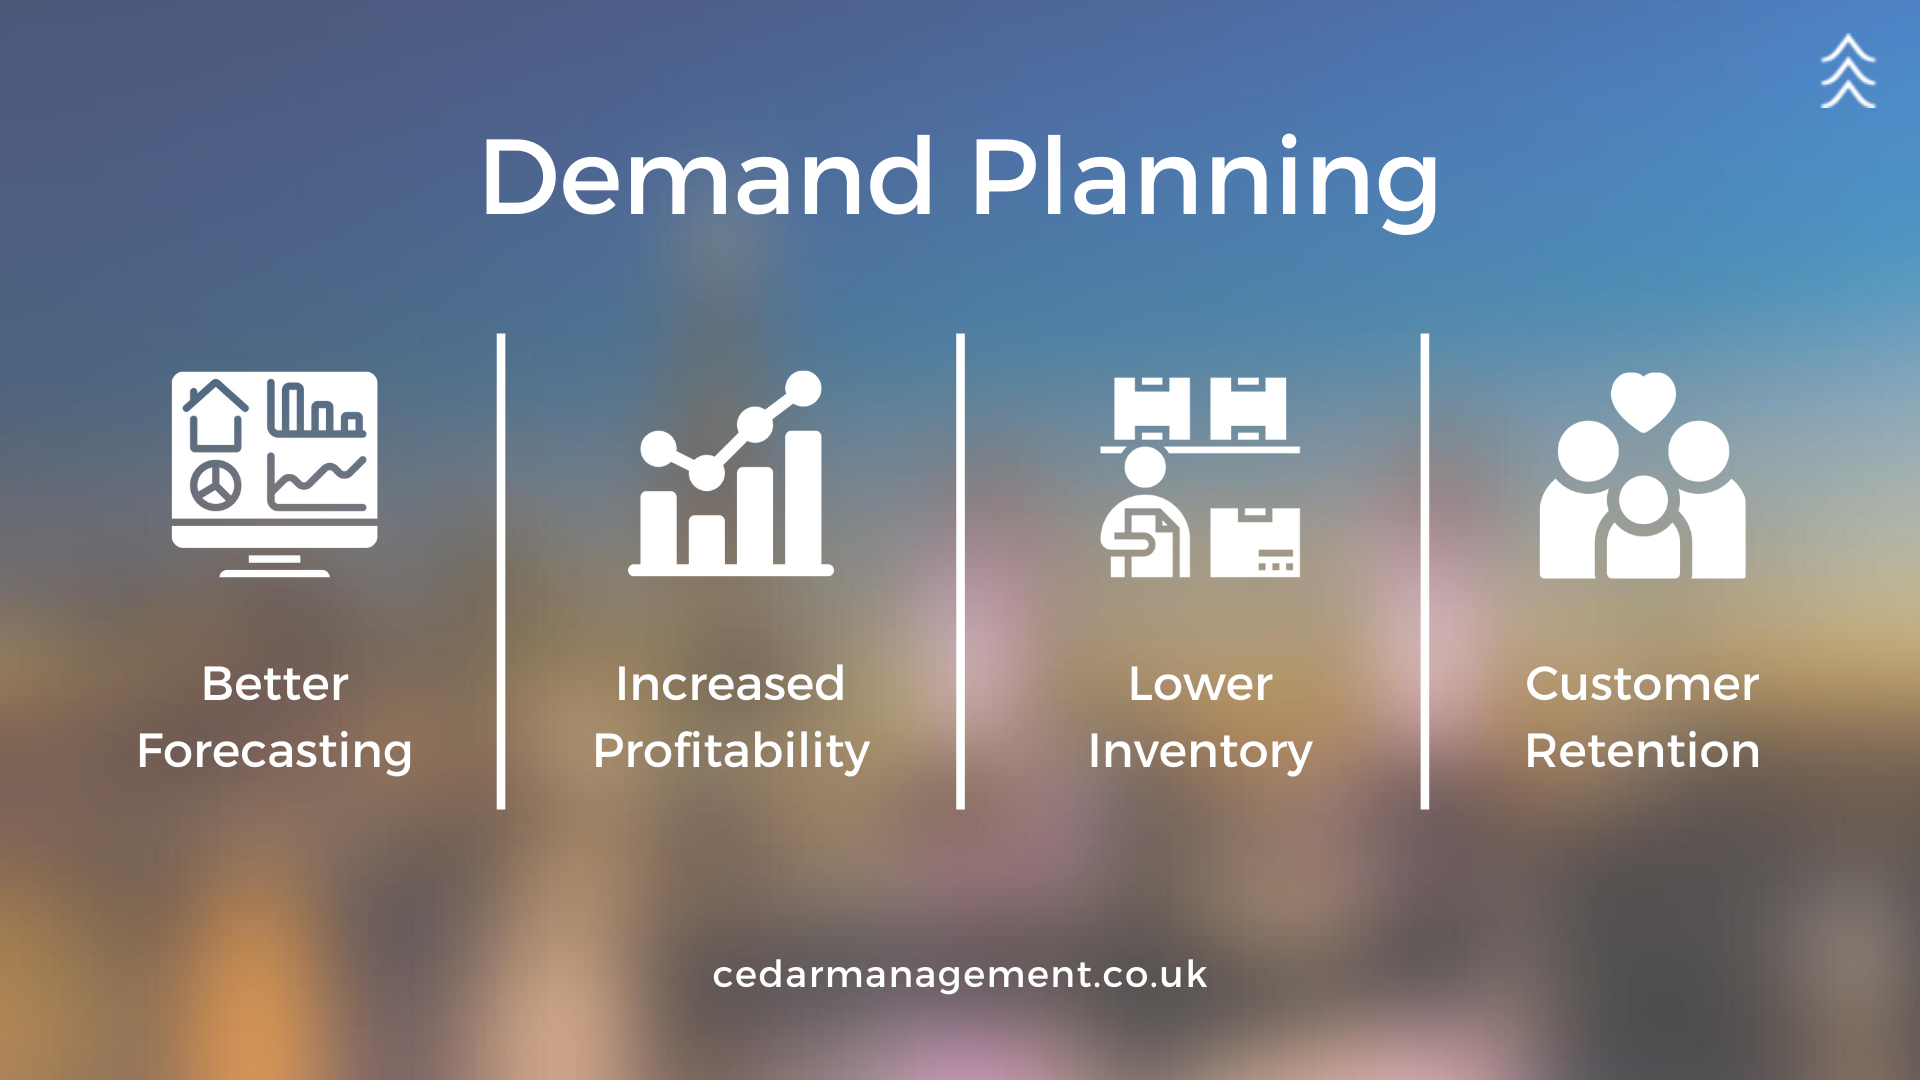 Demand planning. Demand Planner. Demand planning presentation. Demand planning фото задач. Forecast planning